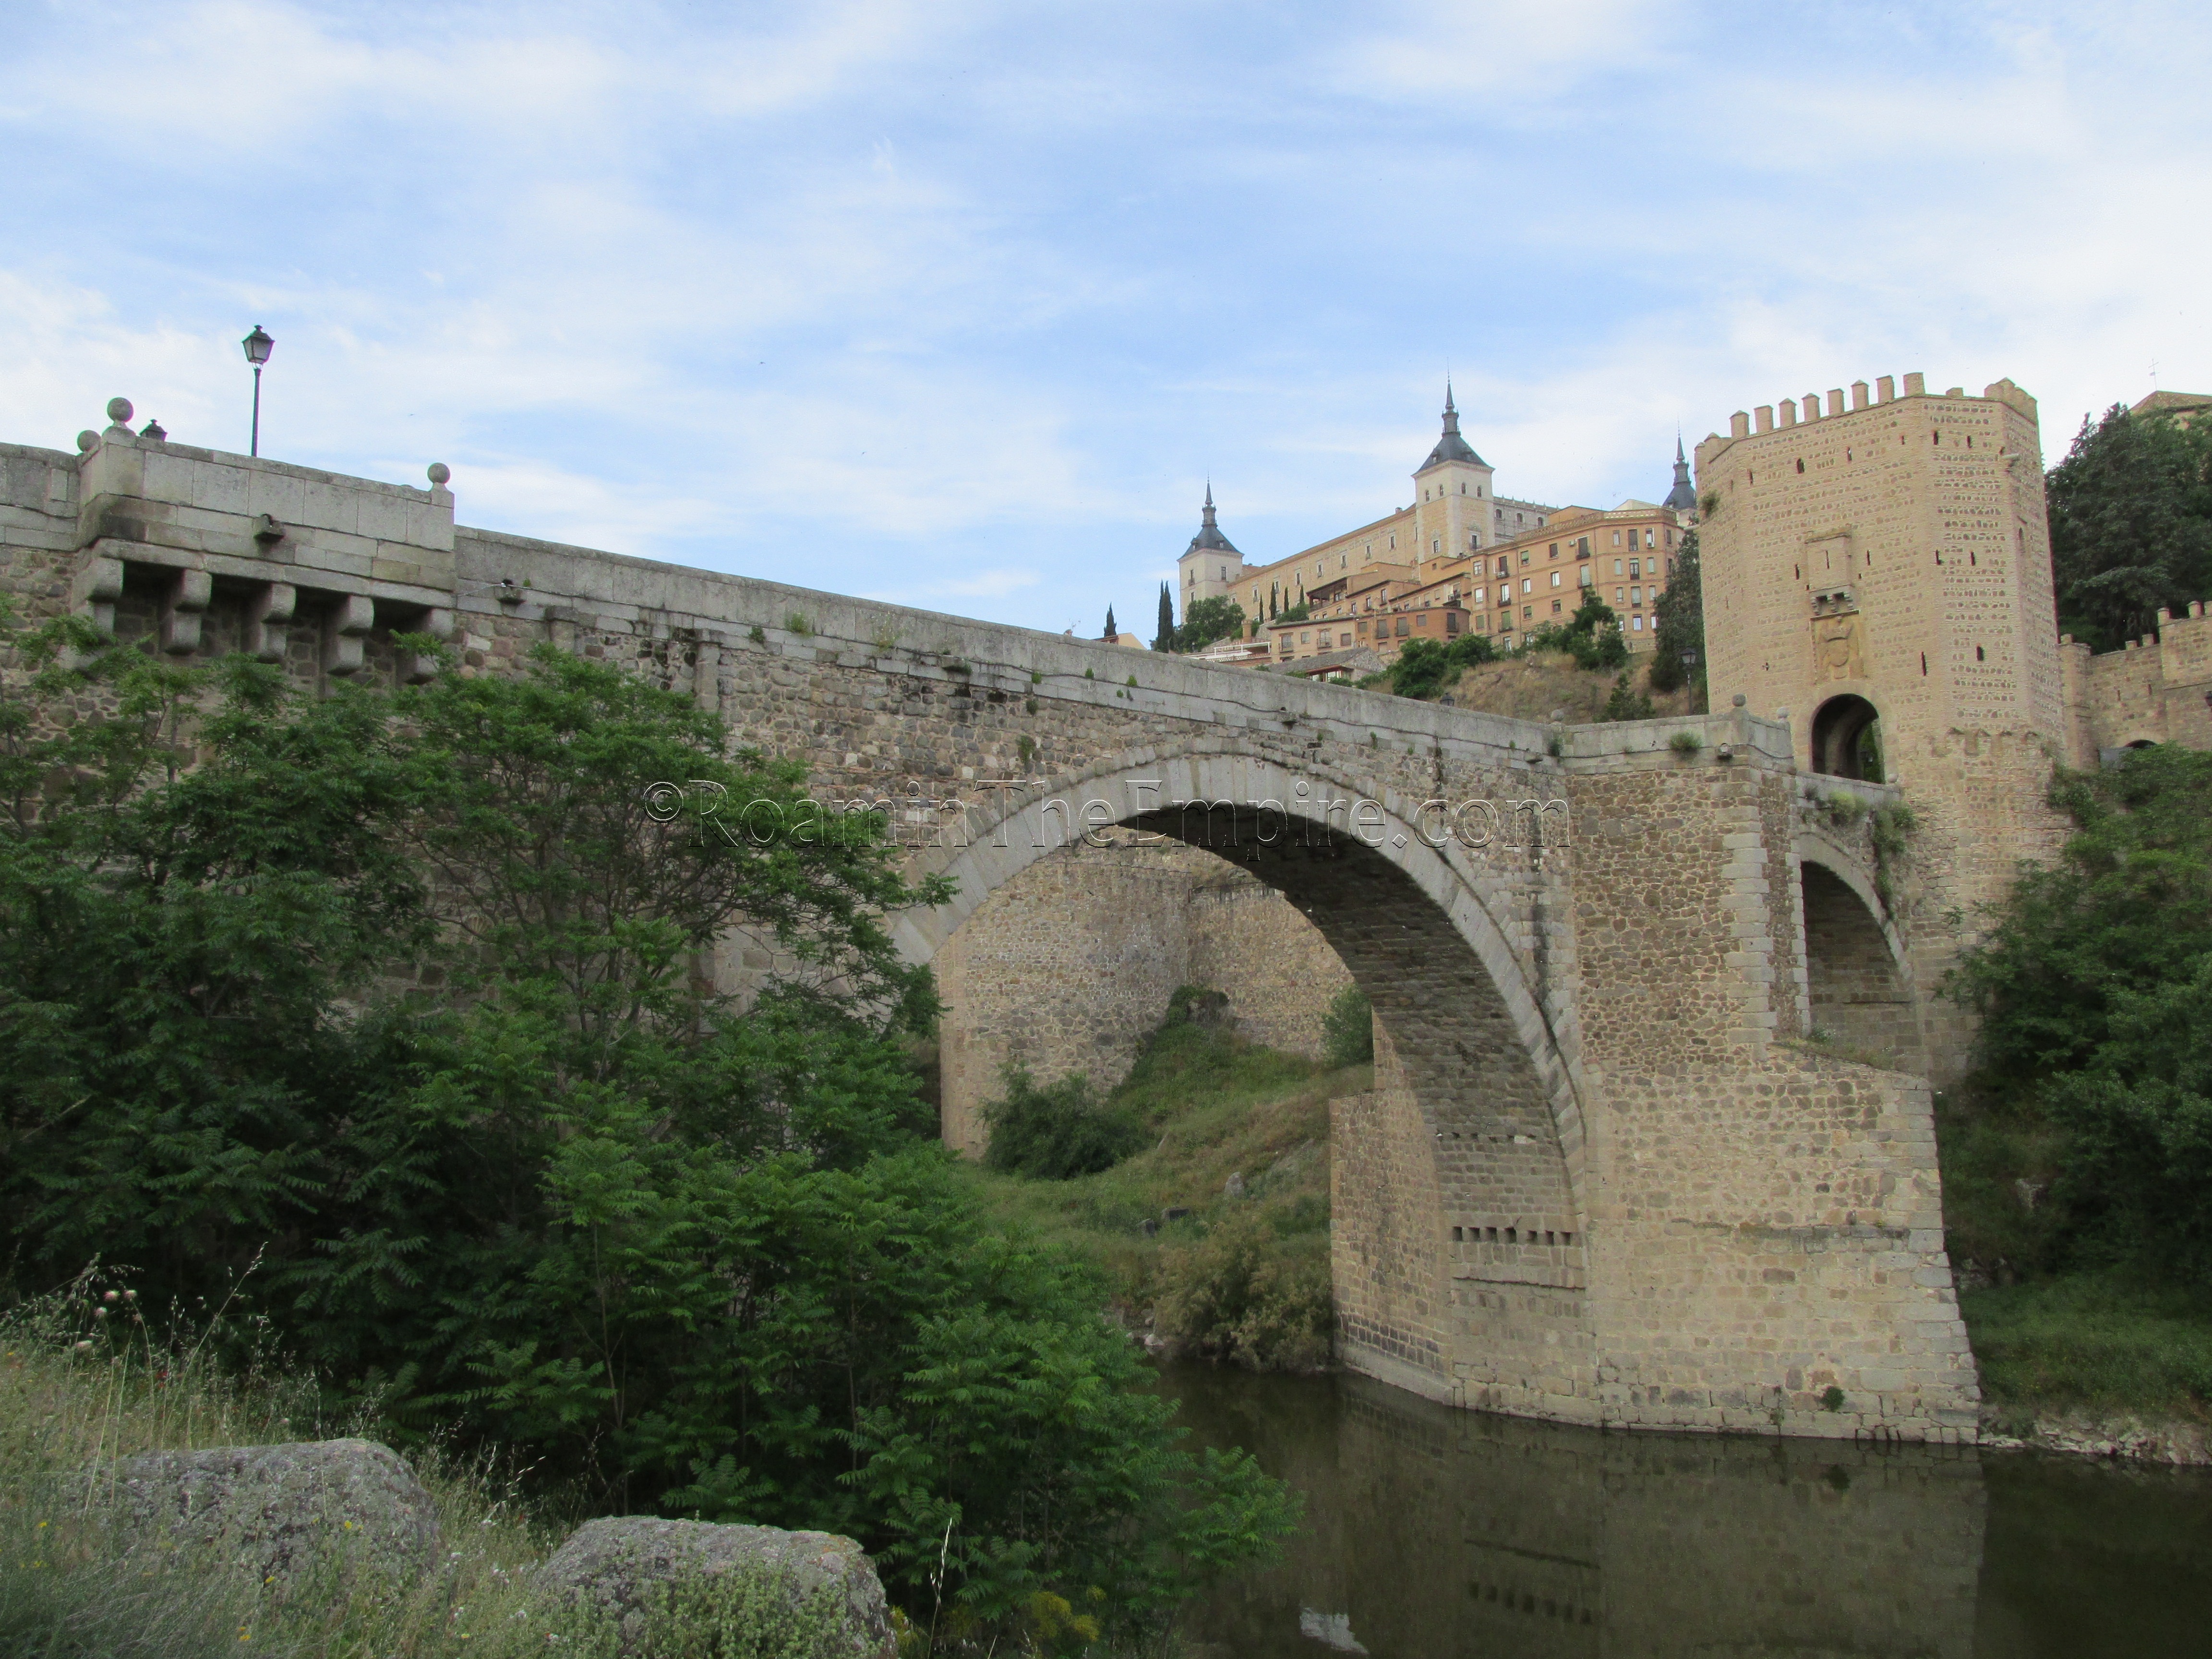 Puente de Alcántara.